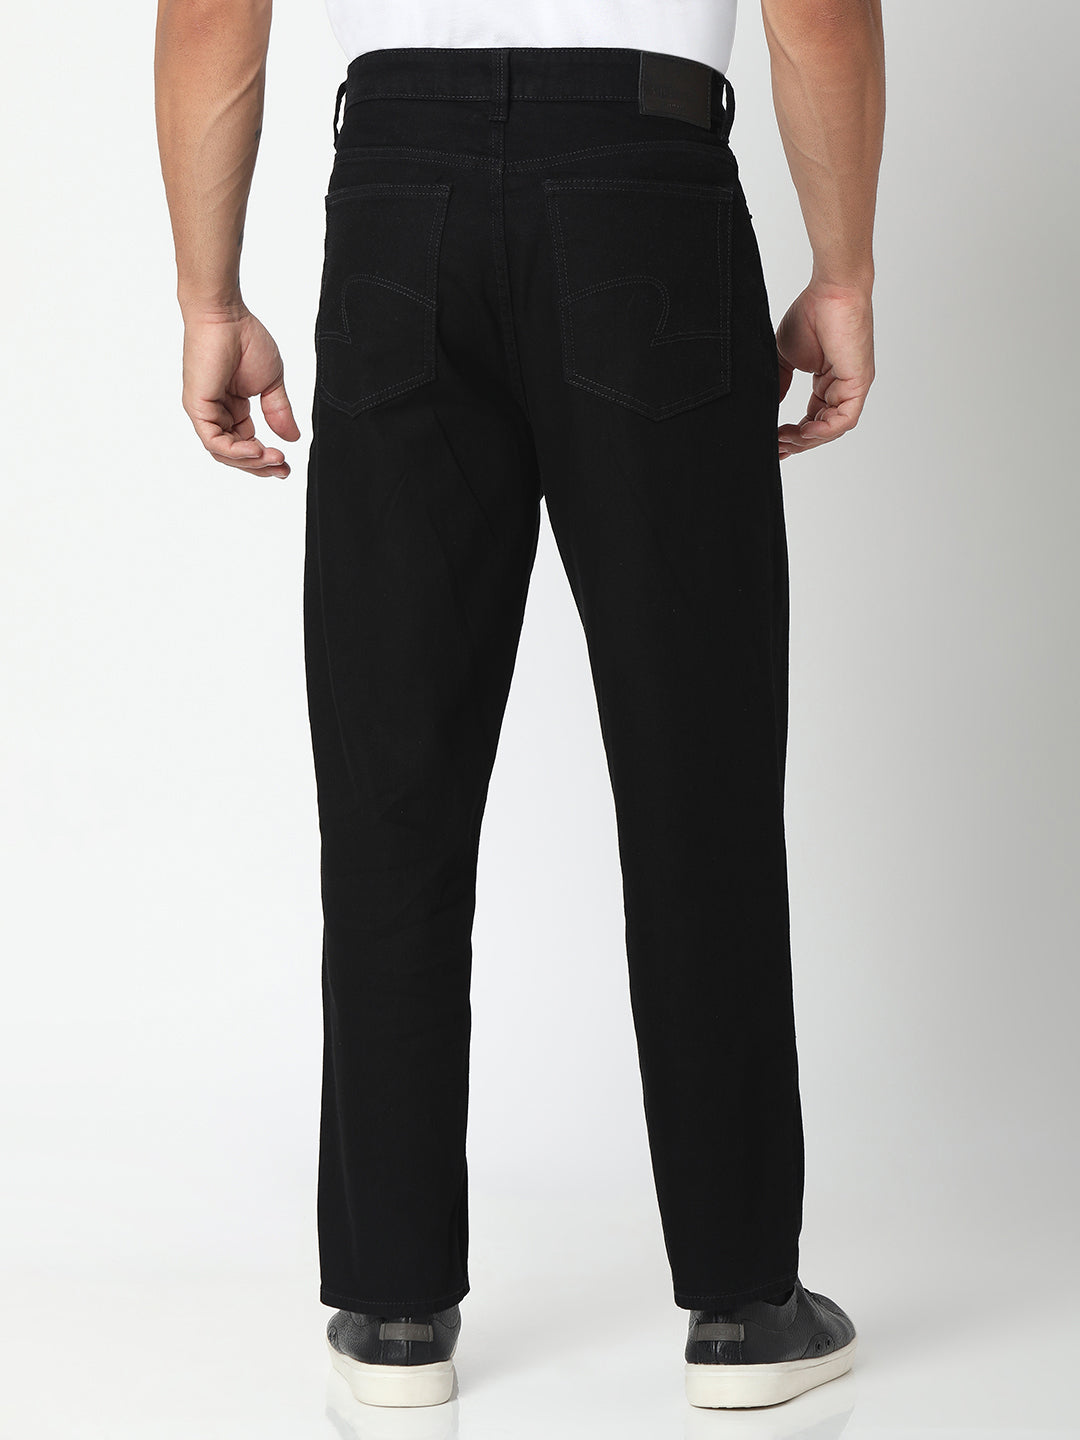 Spykar Black Cotton Loose Fit Regular Length Jeans For Men (Renato)